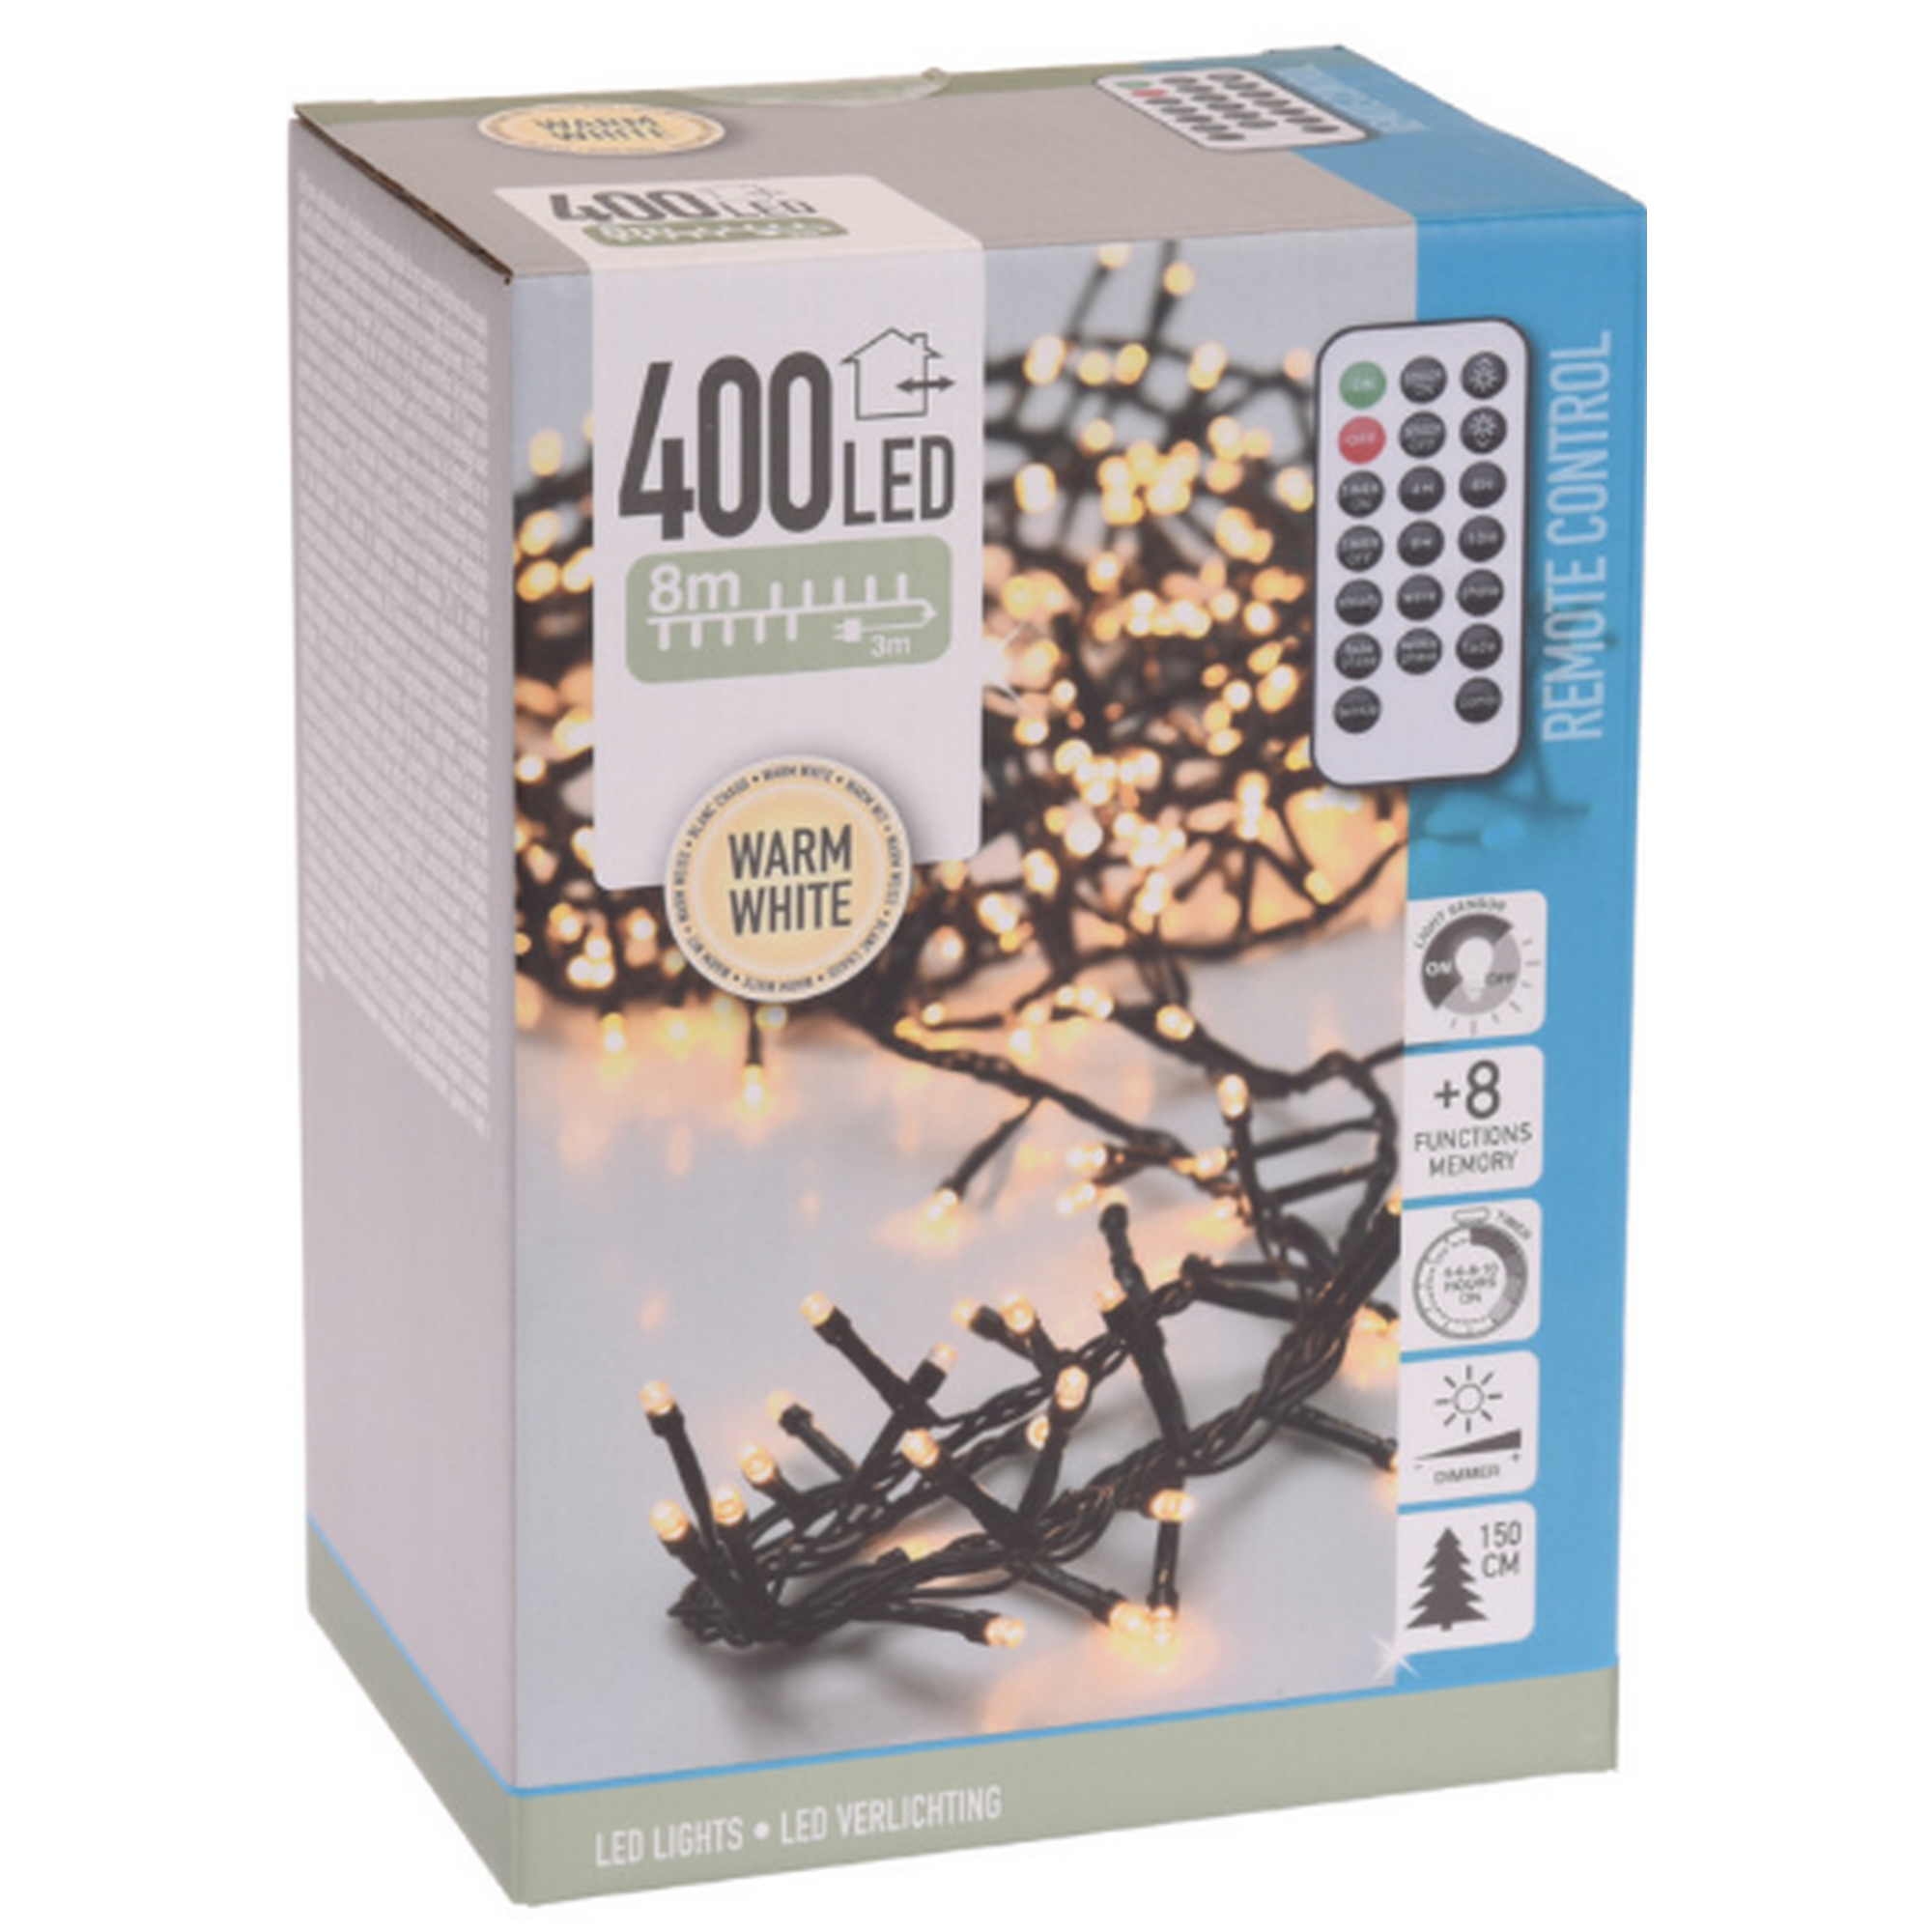 LED-Lichterkette 400 LEDs warmweiß 800 cm + product picture